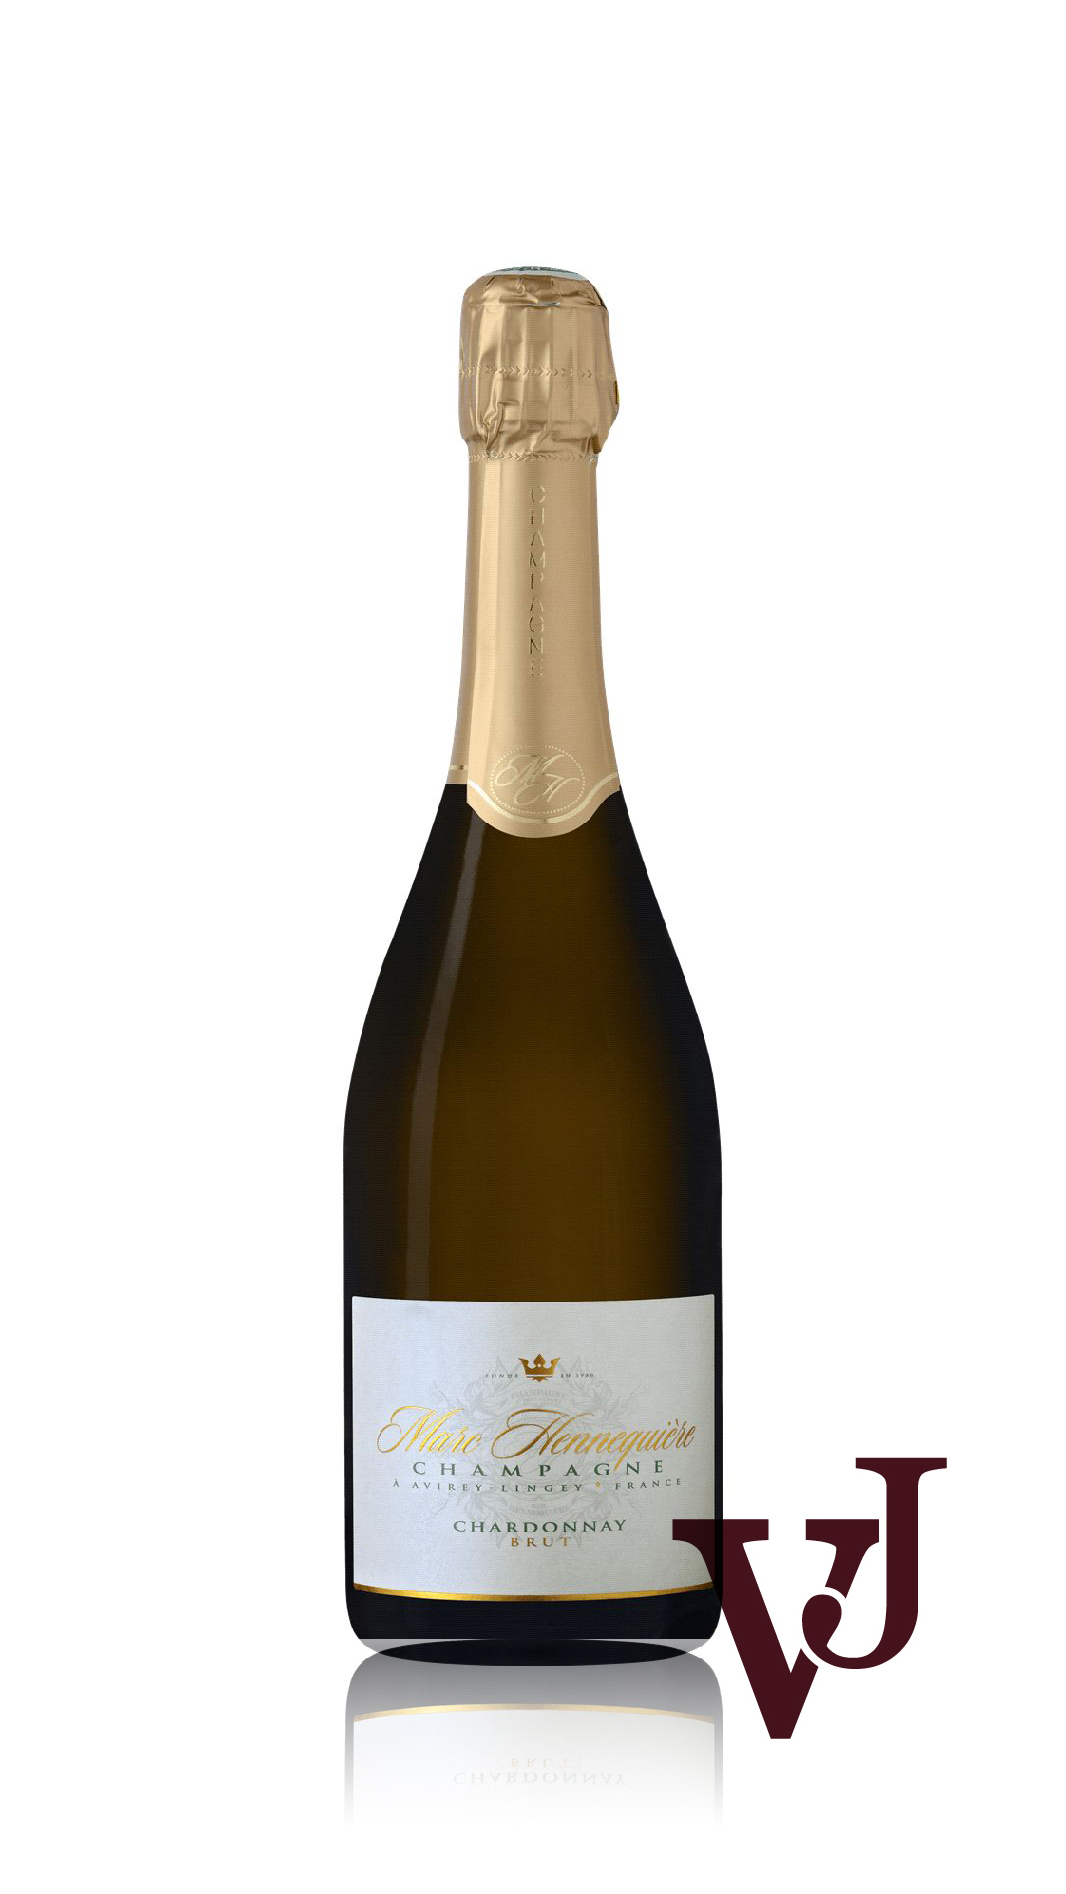 Mousserande Vin - Champagne Hennequière Cuvée Chardonnay artikel nummer 5488101 från producenten Champagne Marc Hennequière från området Frankrike